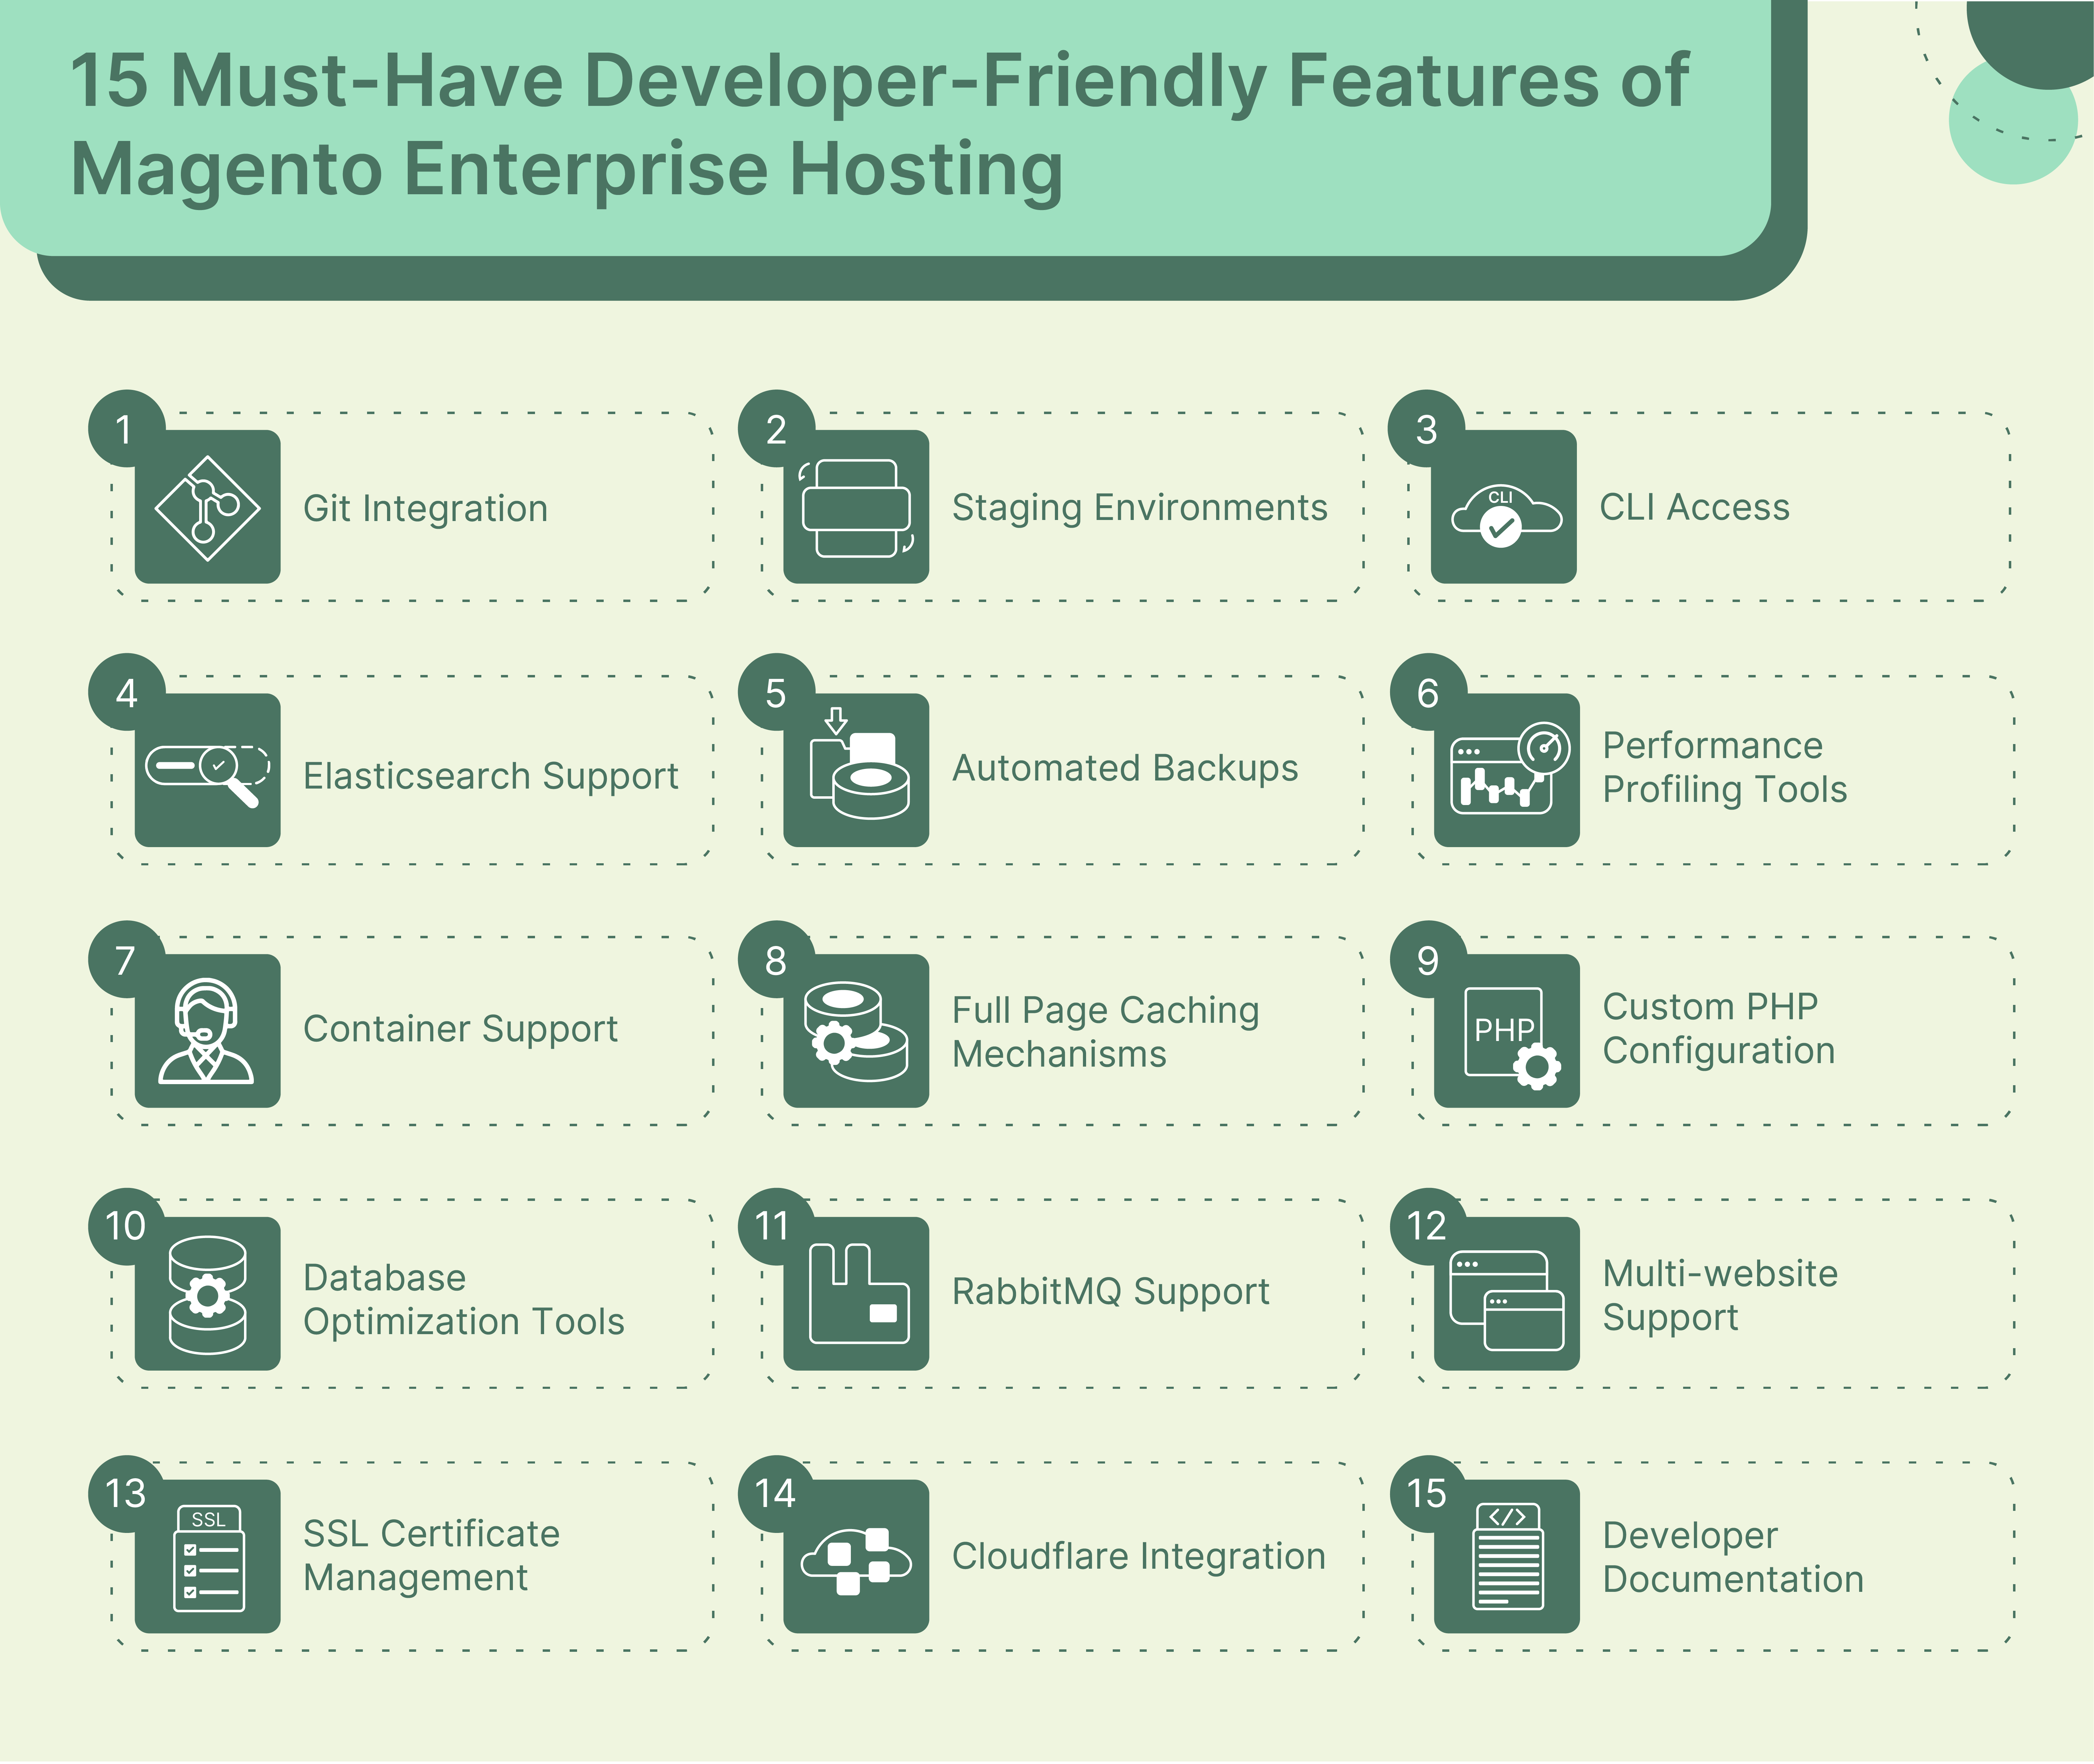 15 Developer-Friendly Features of Magento Enterprise Hosting